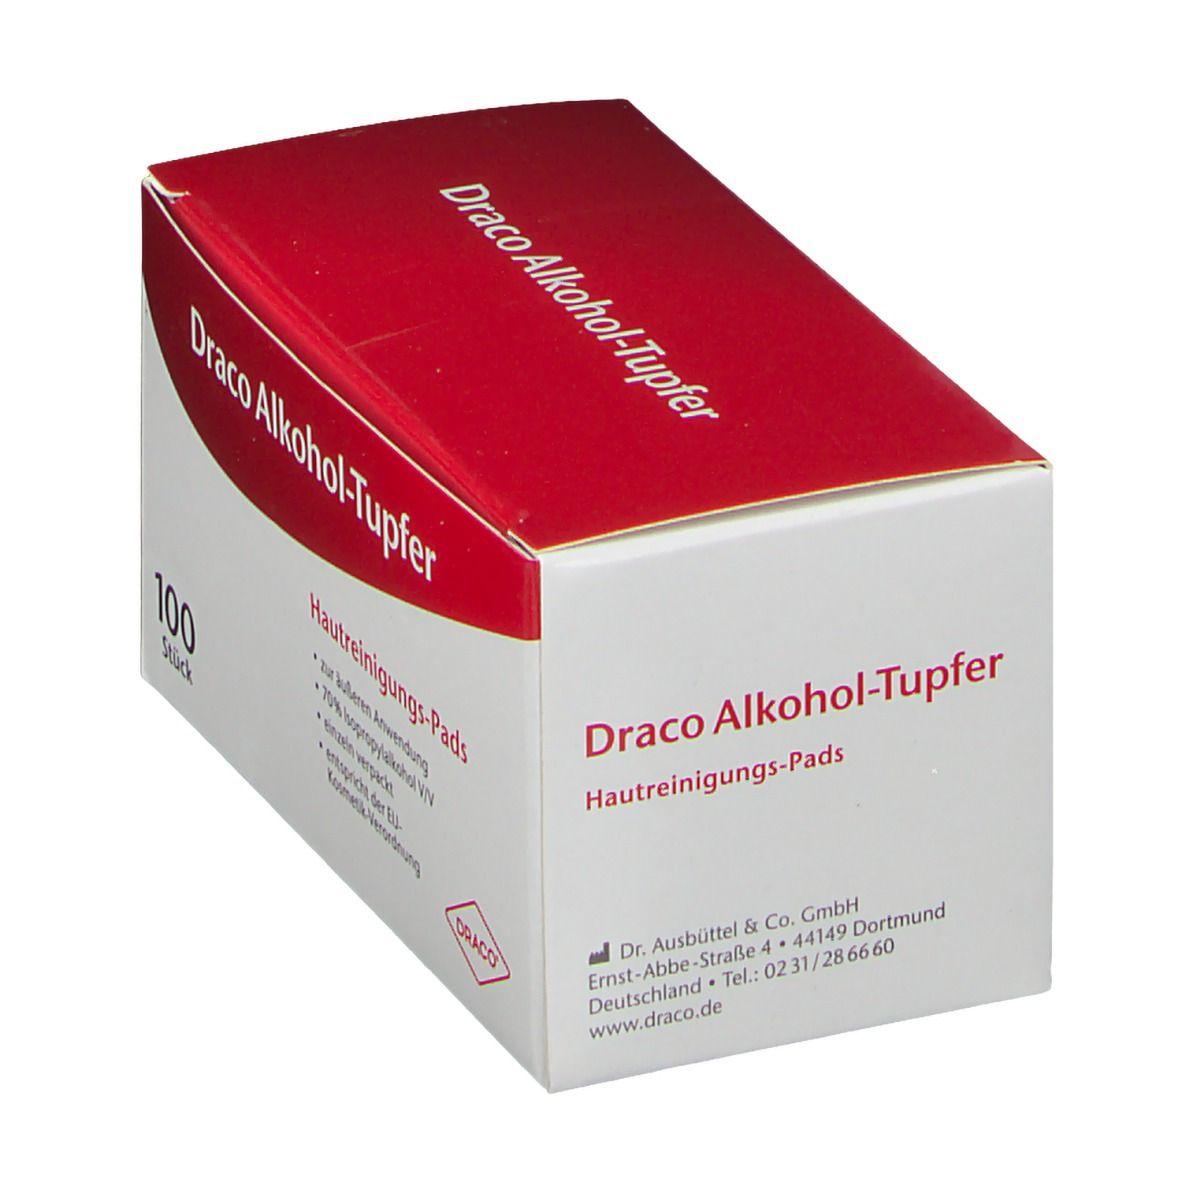 Draco Alkohol-Tupfer einzeln verpackt